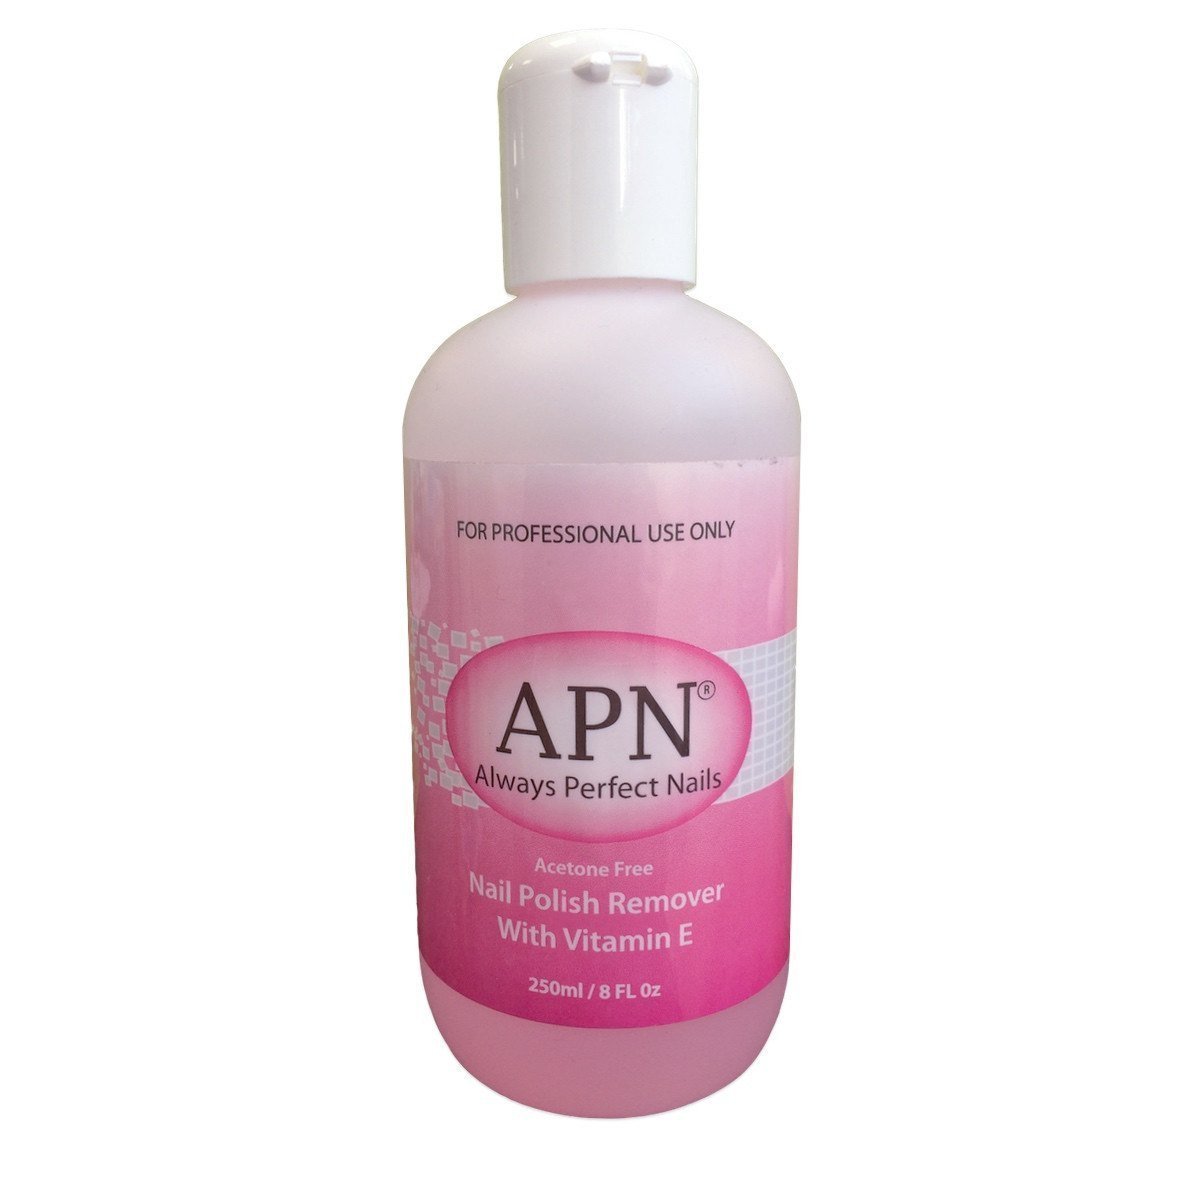 APN | Always Perfect Nails | Acetone Free Nail Polish Remover - beautyhair.co.ukNails